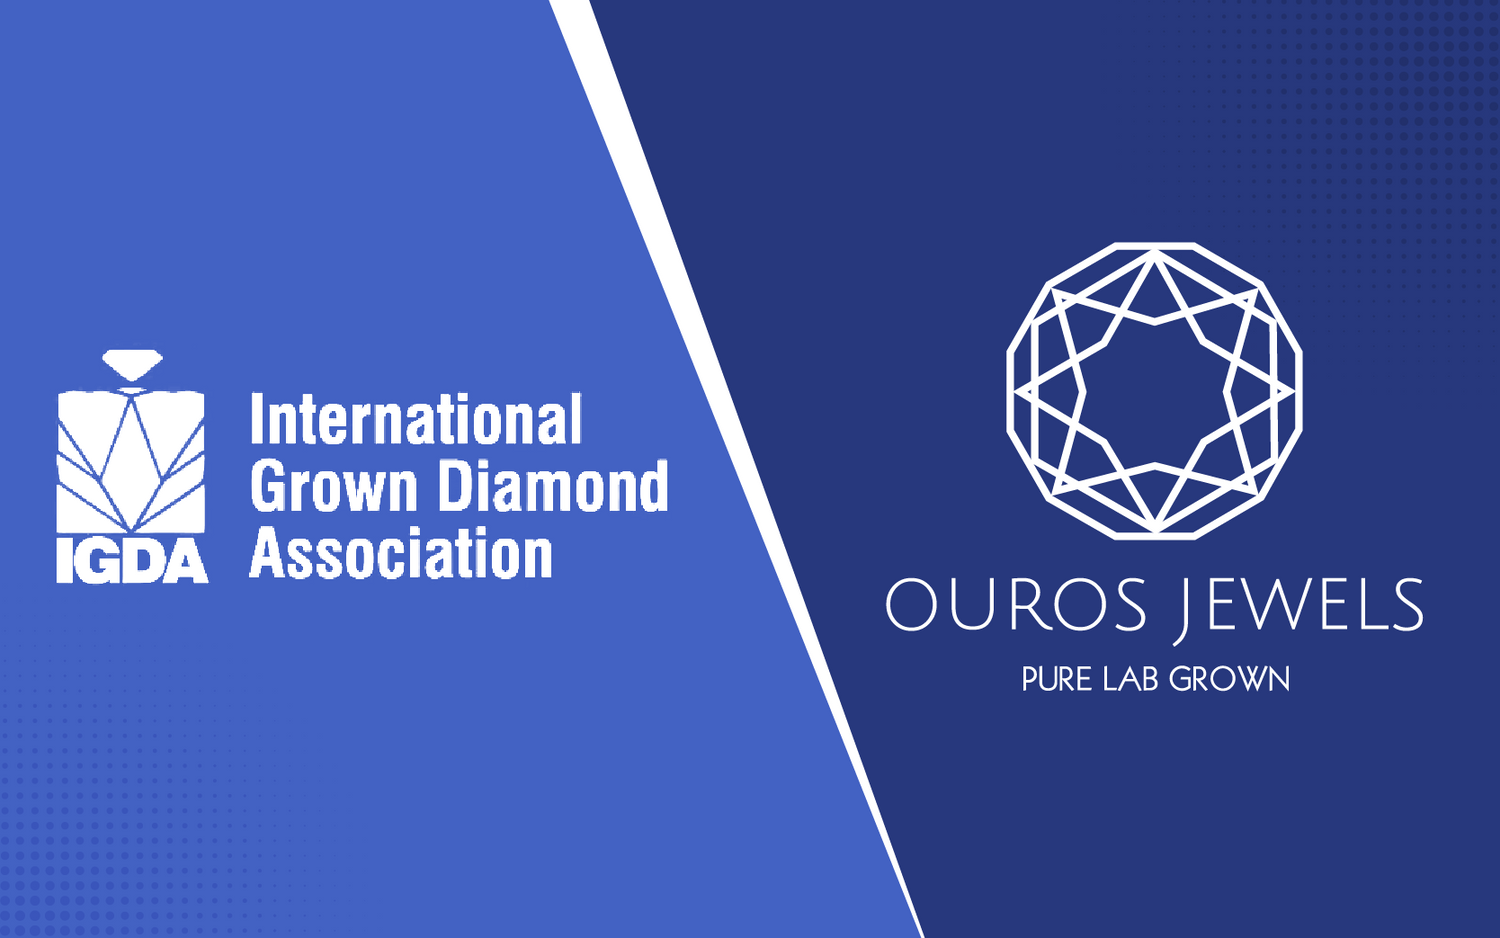 IGDA : International Grown Diamond Association